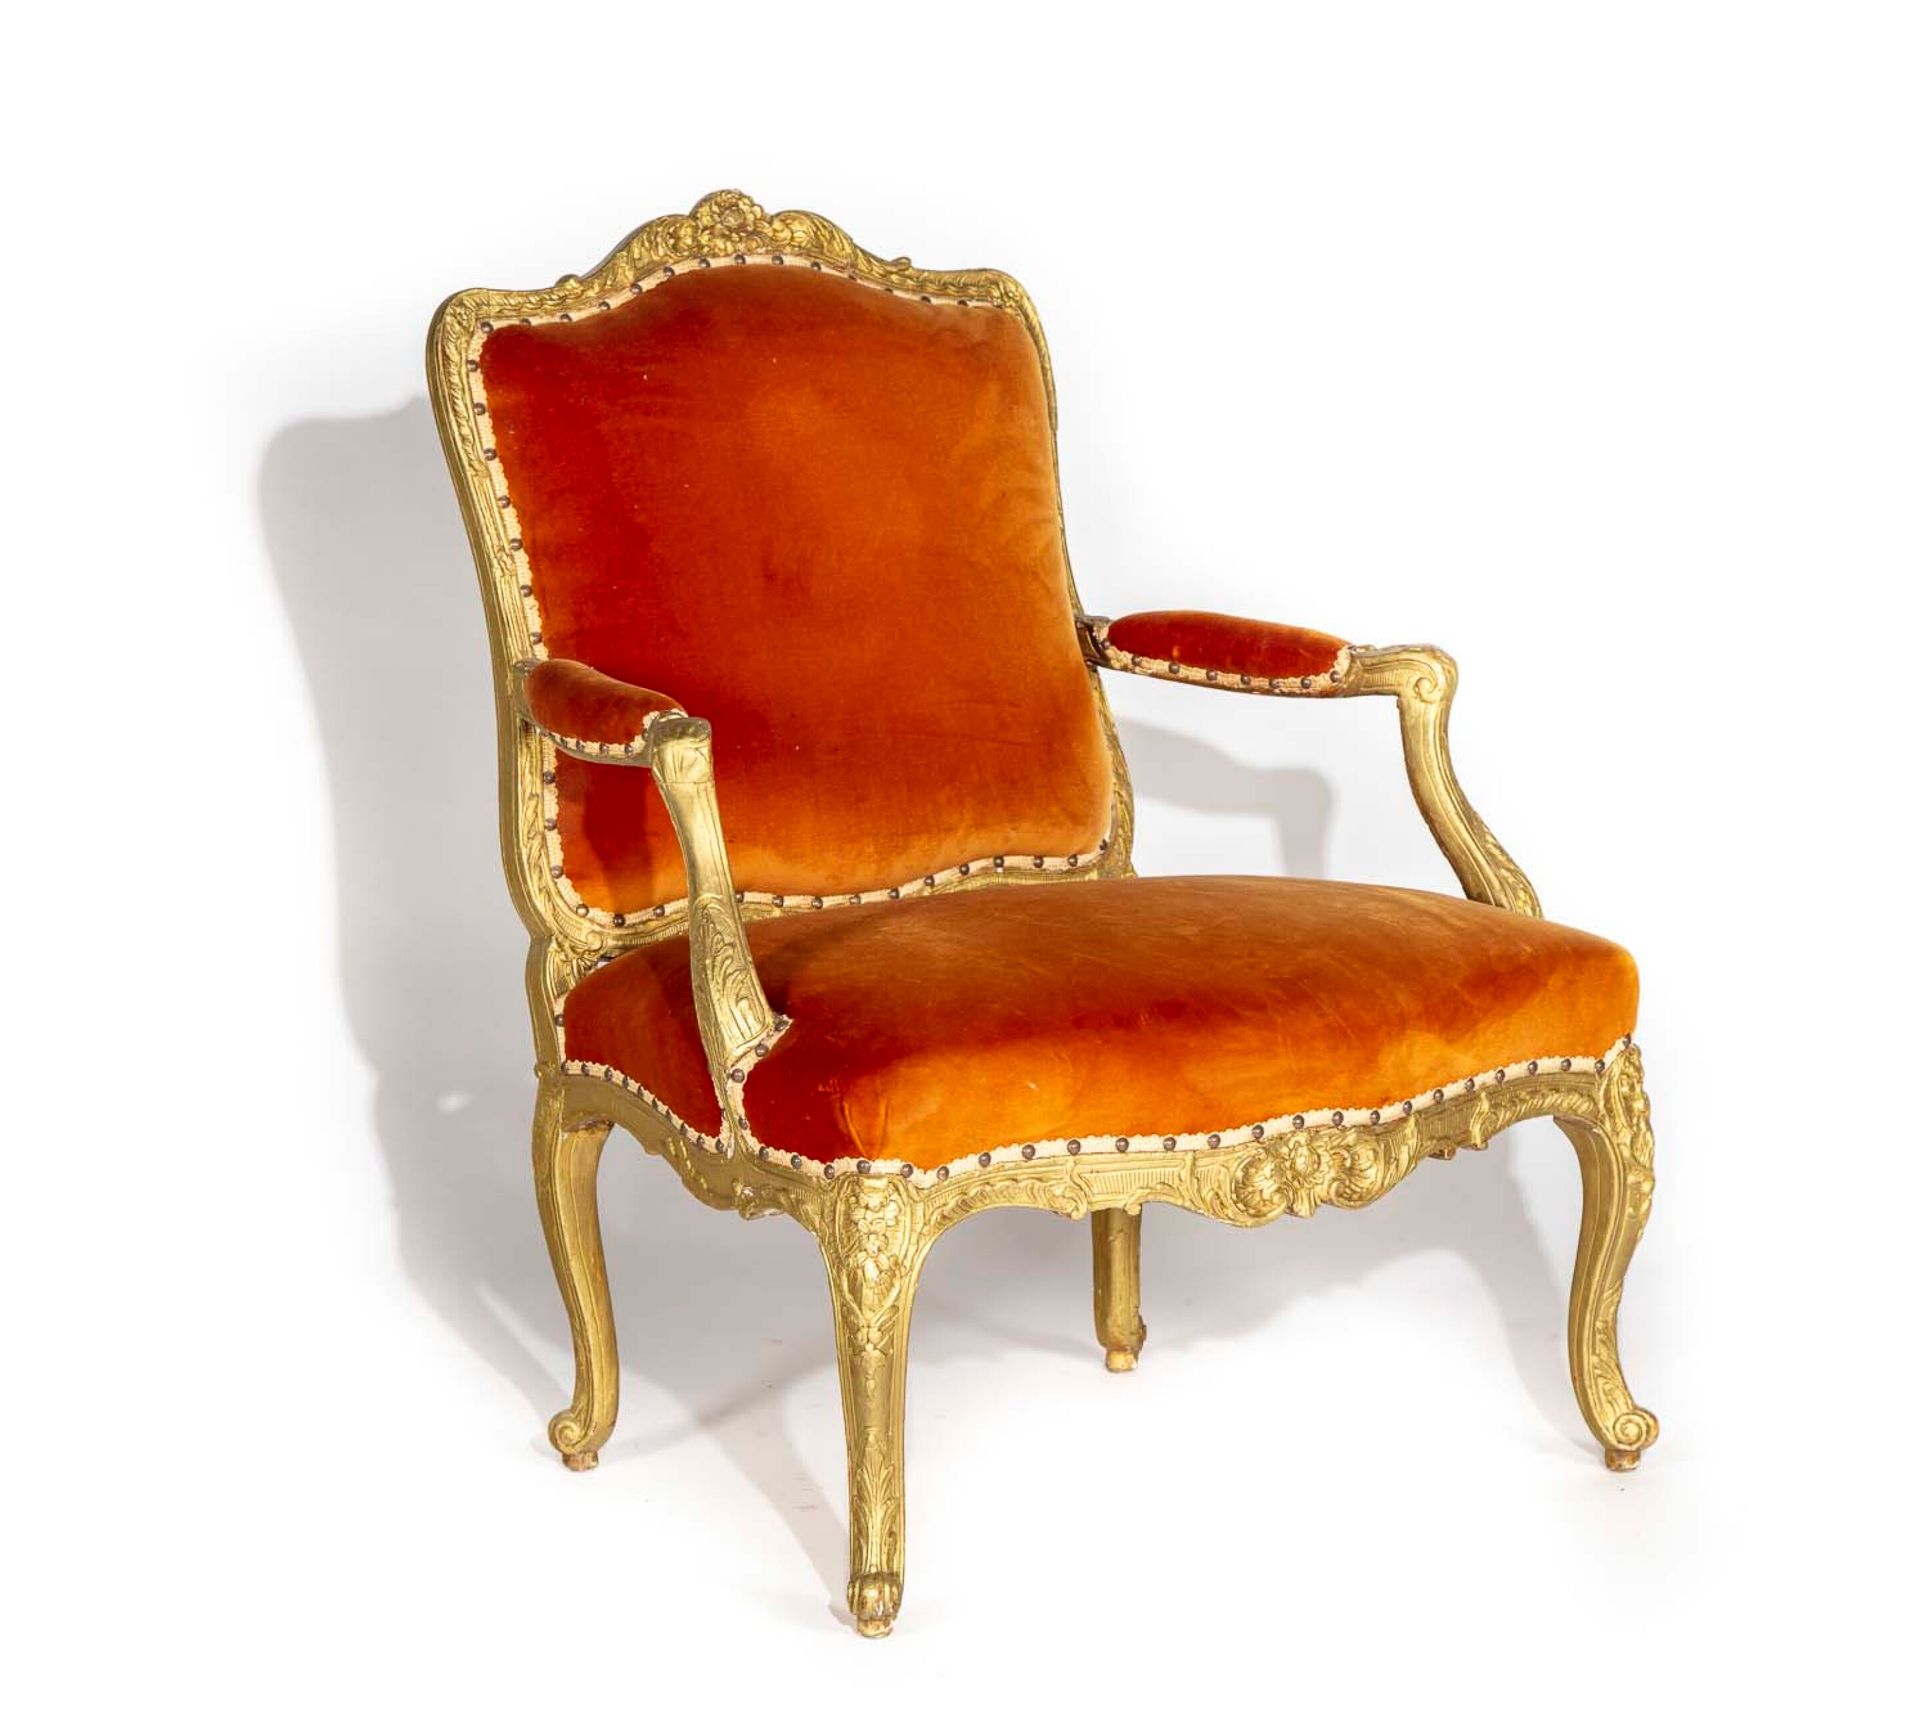 Null 雕刻和镀金的木制扶手椅，有平坦的靠背，装饰有叶子和罗盖尔的小图案

路易十五时期

H.96 cm; L. 76 cm

事故和修复